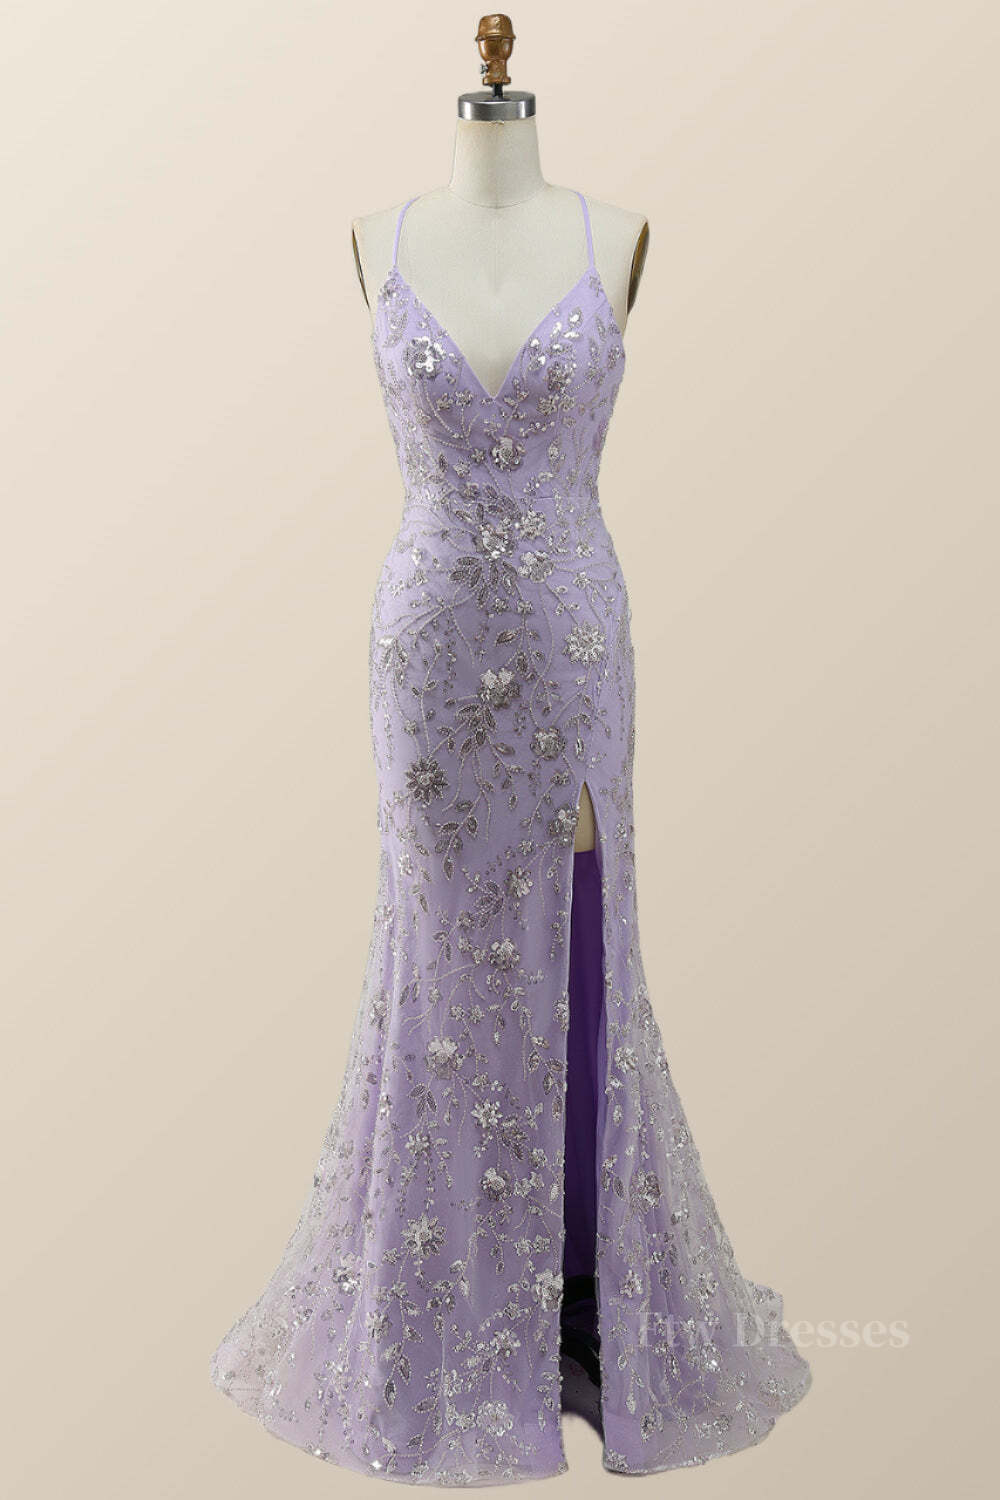 Beaded Lavender Mermaid Long Formal Dress